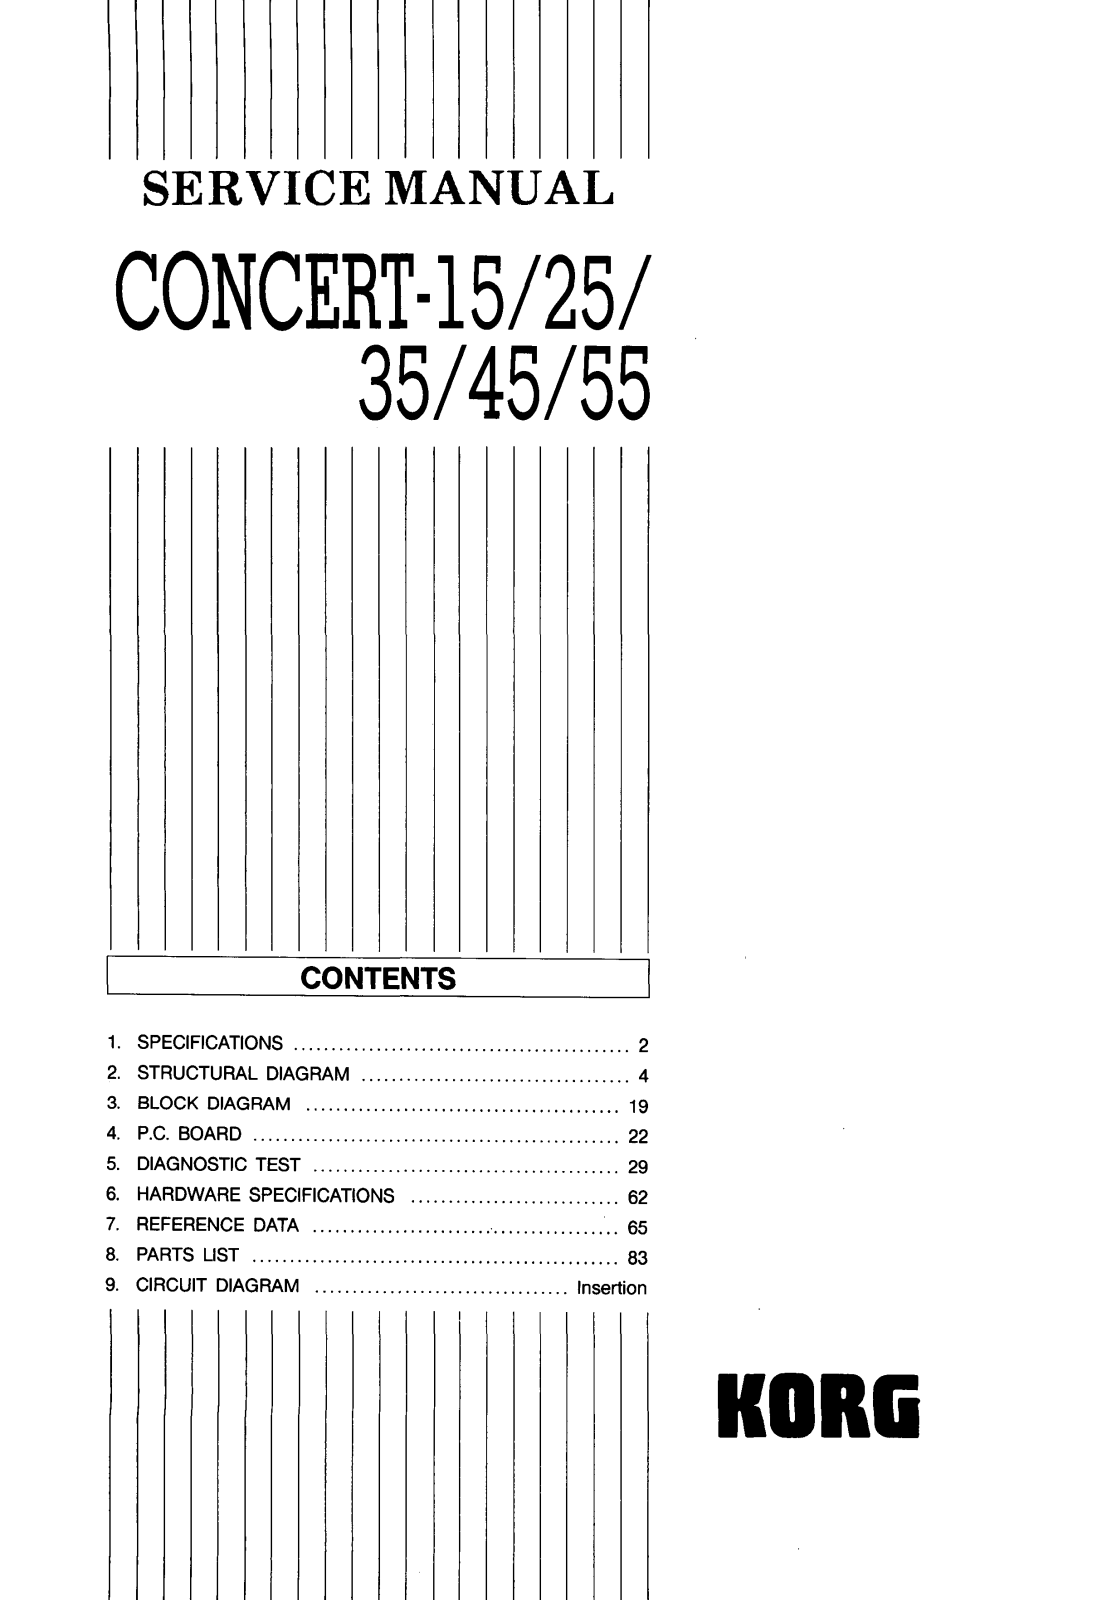 Korg Concert-55, Concert-45, Concert-35, Concert-25, Concert-15 Service Manual